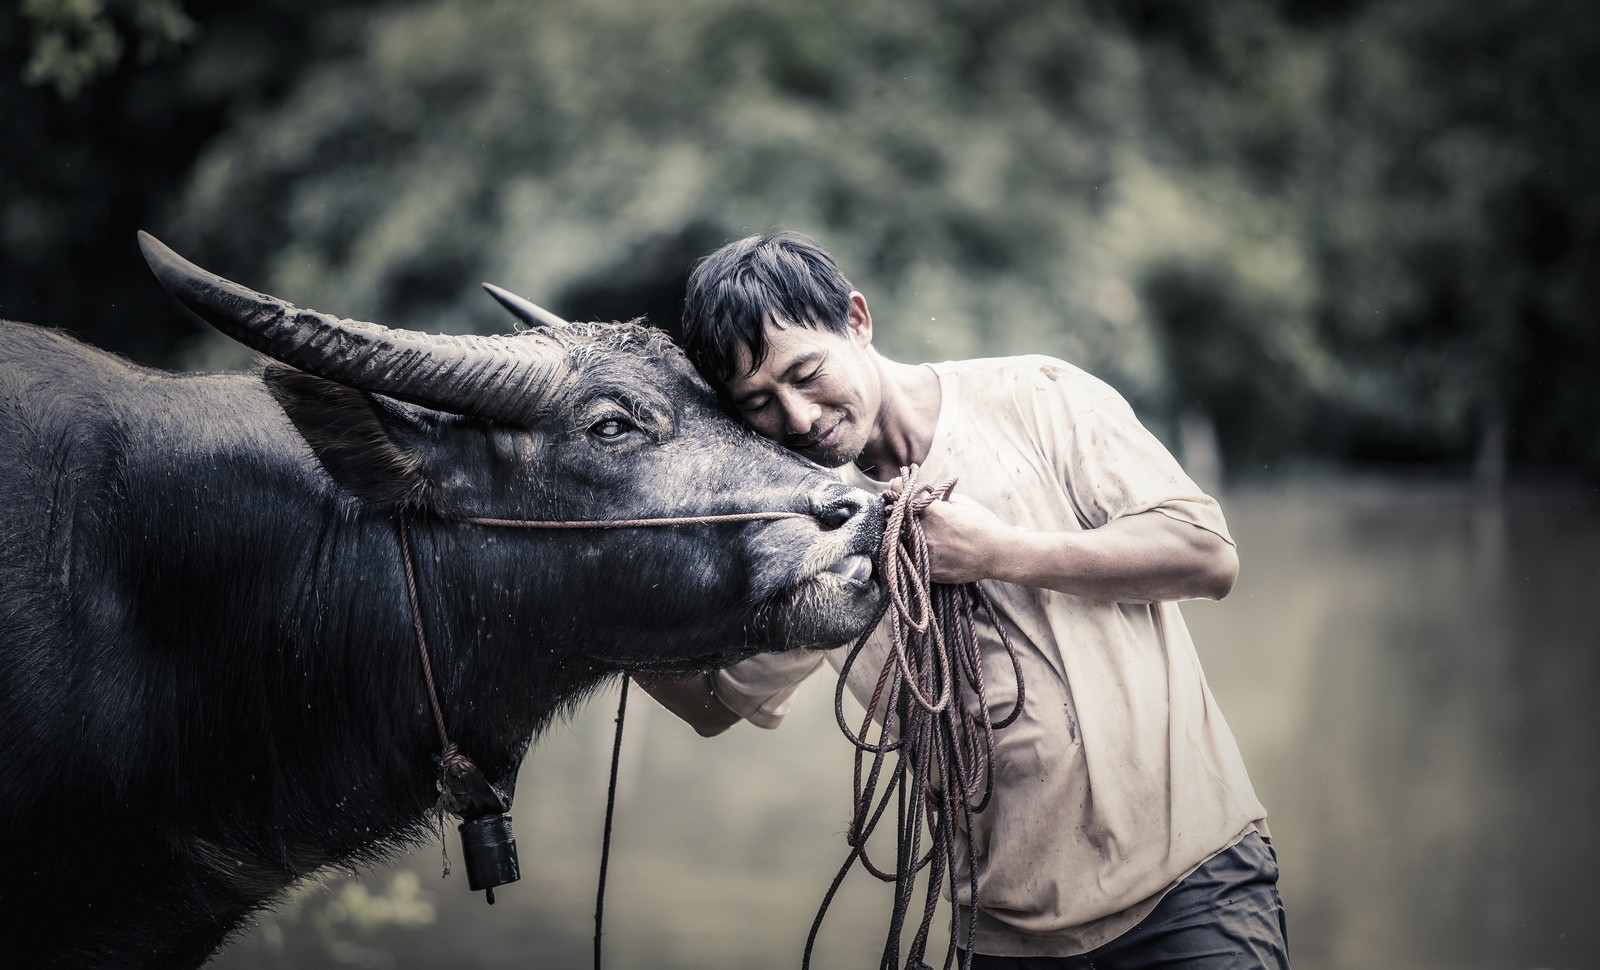 People 1600x970 men mammals animals Asia workers men outdoors bulls farmers